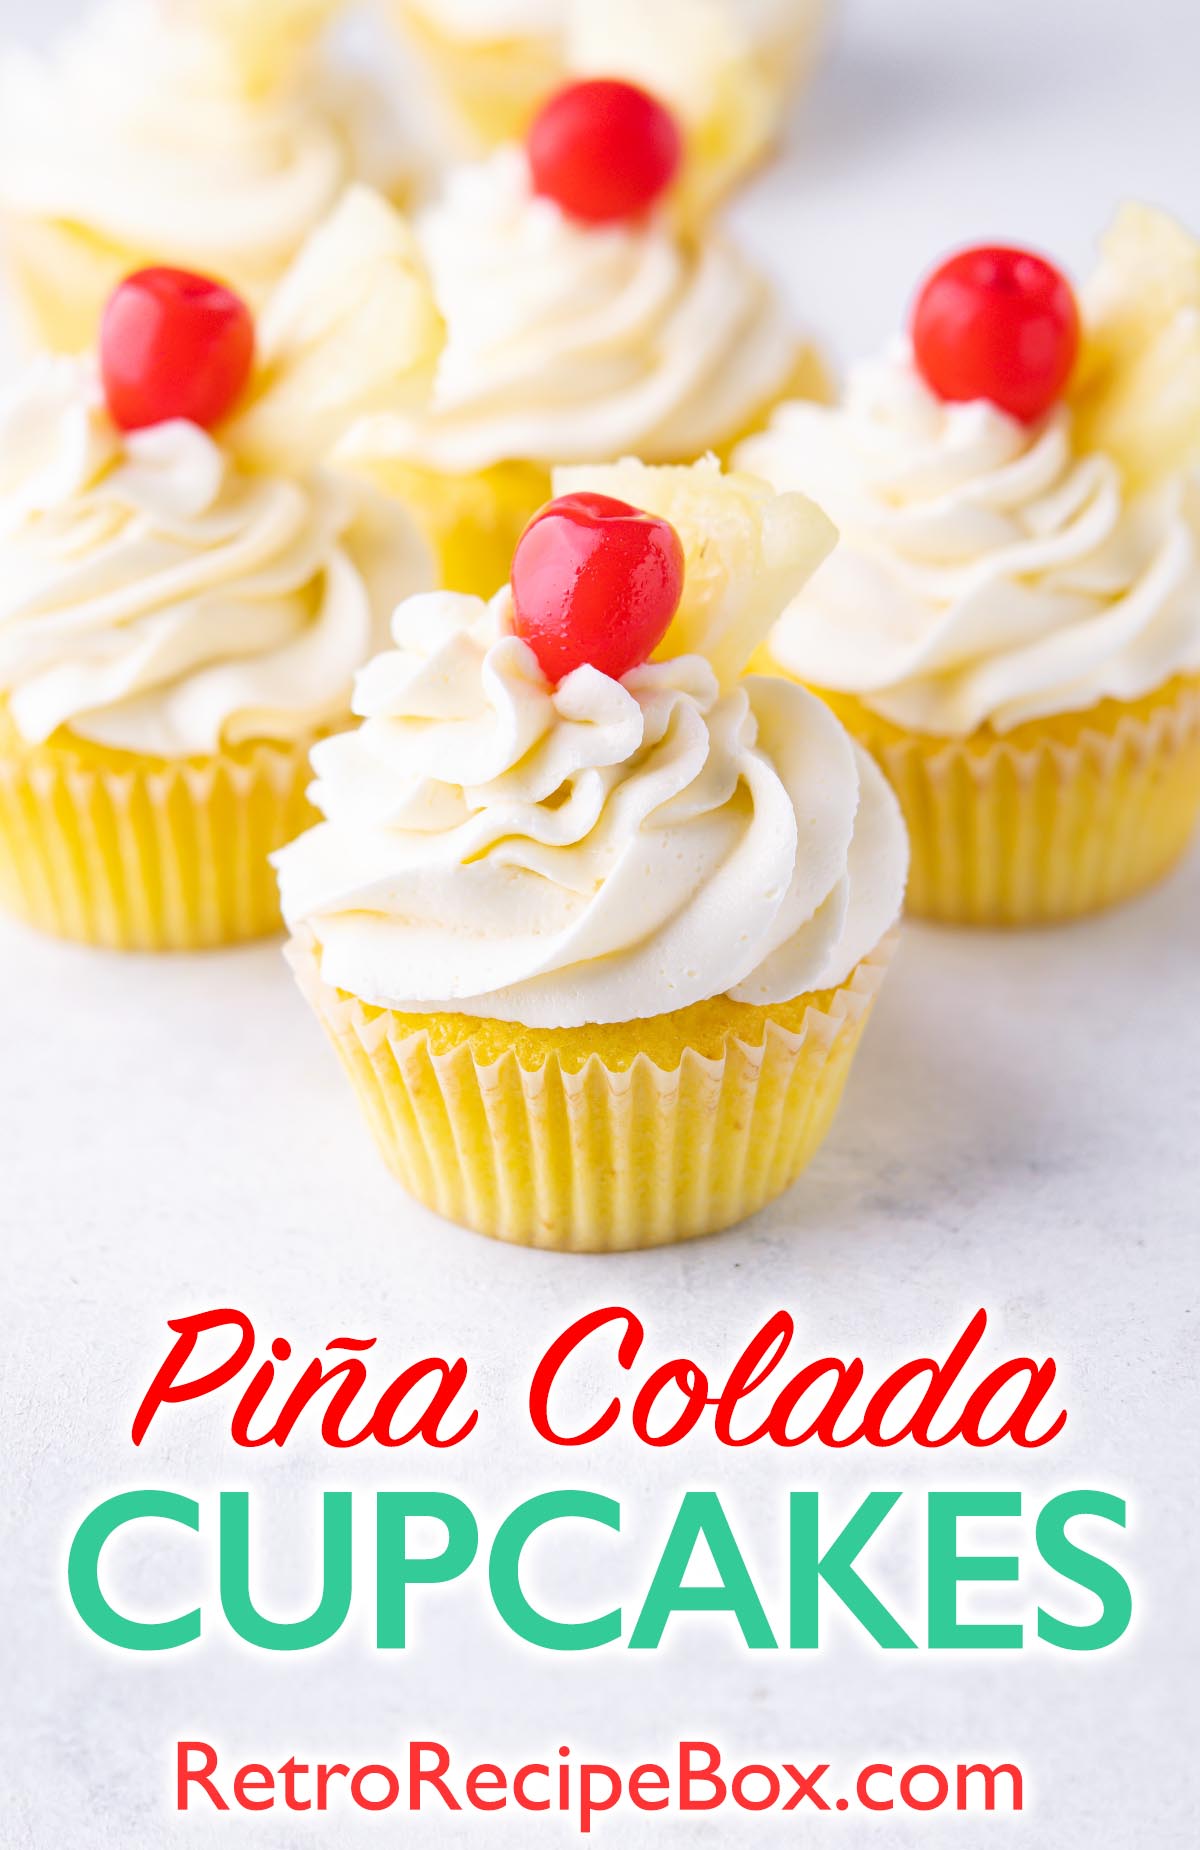 Piña Colada Cupcakes on light grey surface